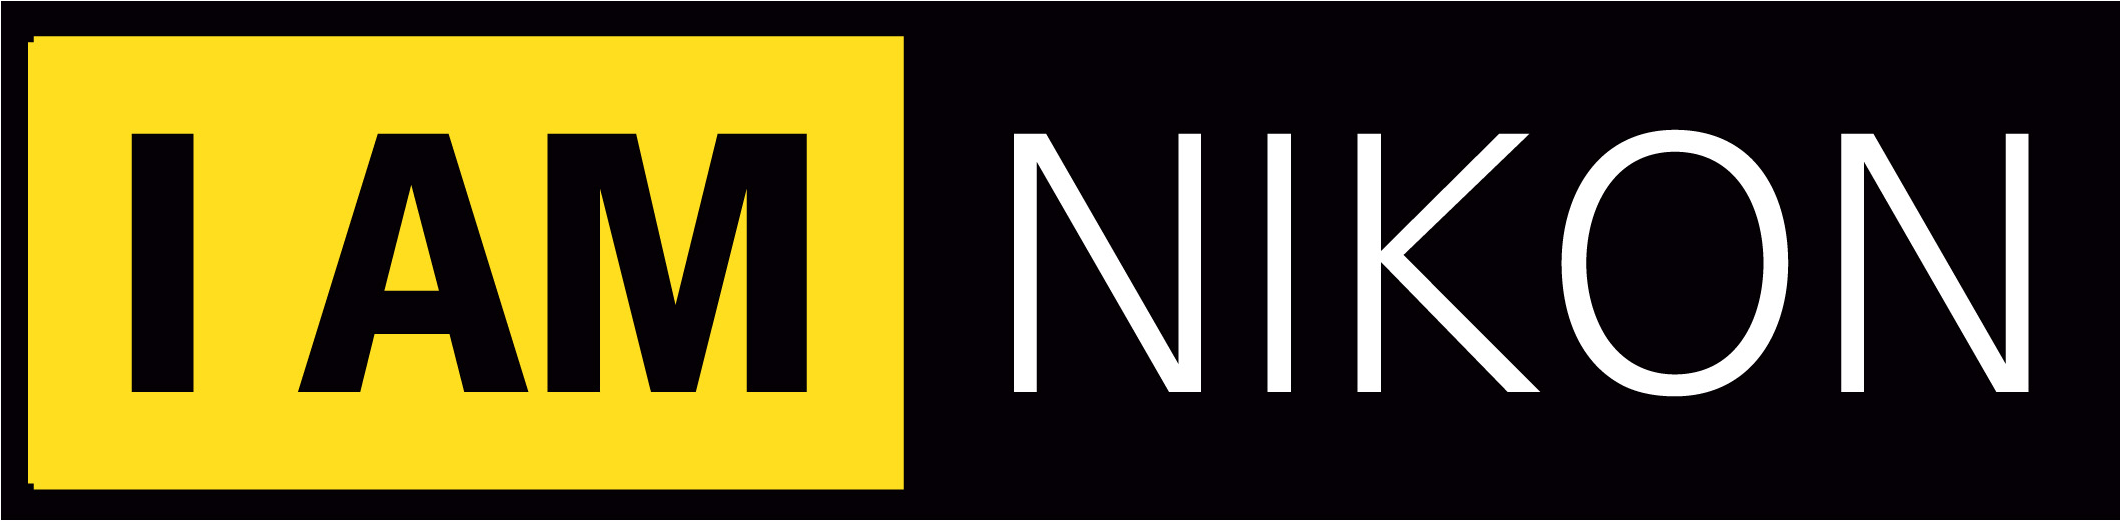 I Am Nikon Logo Wwwpixsharkcom Images Galleries With - Nikon D5300 24.2 Megapixel Digital Slr Camera (2119x890)